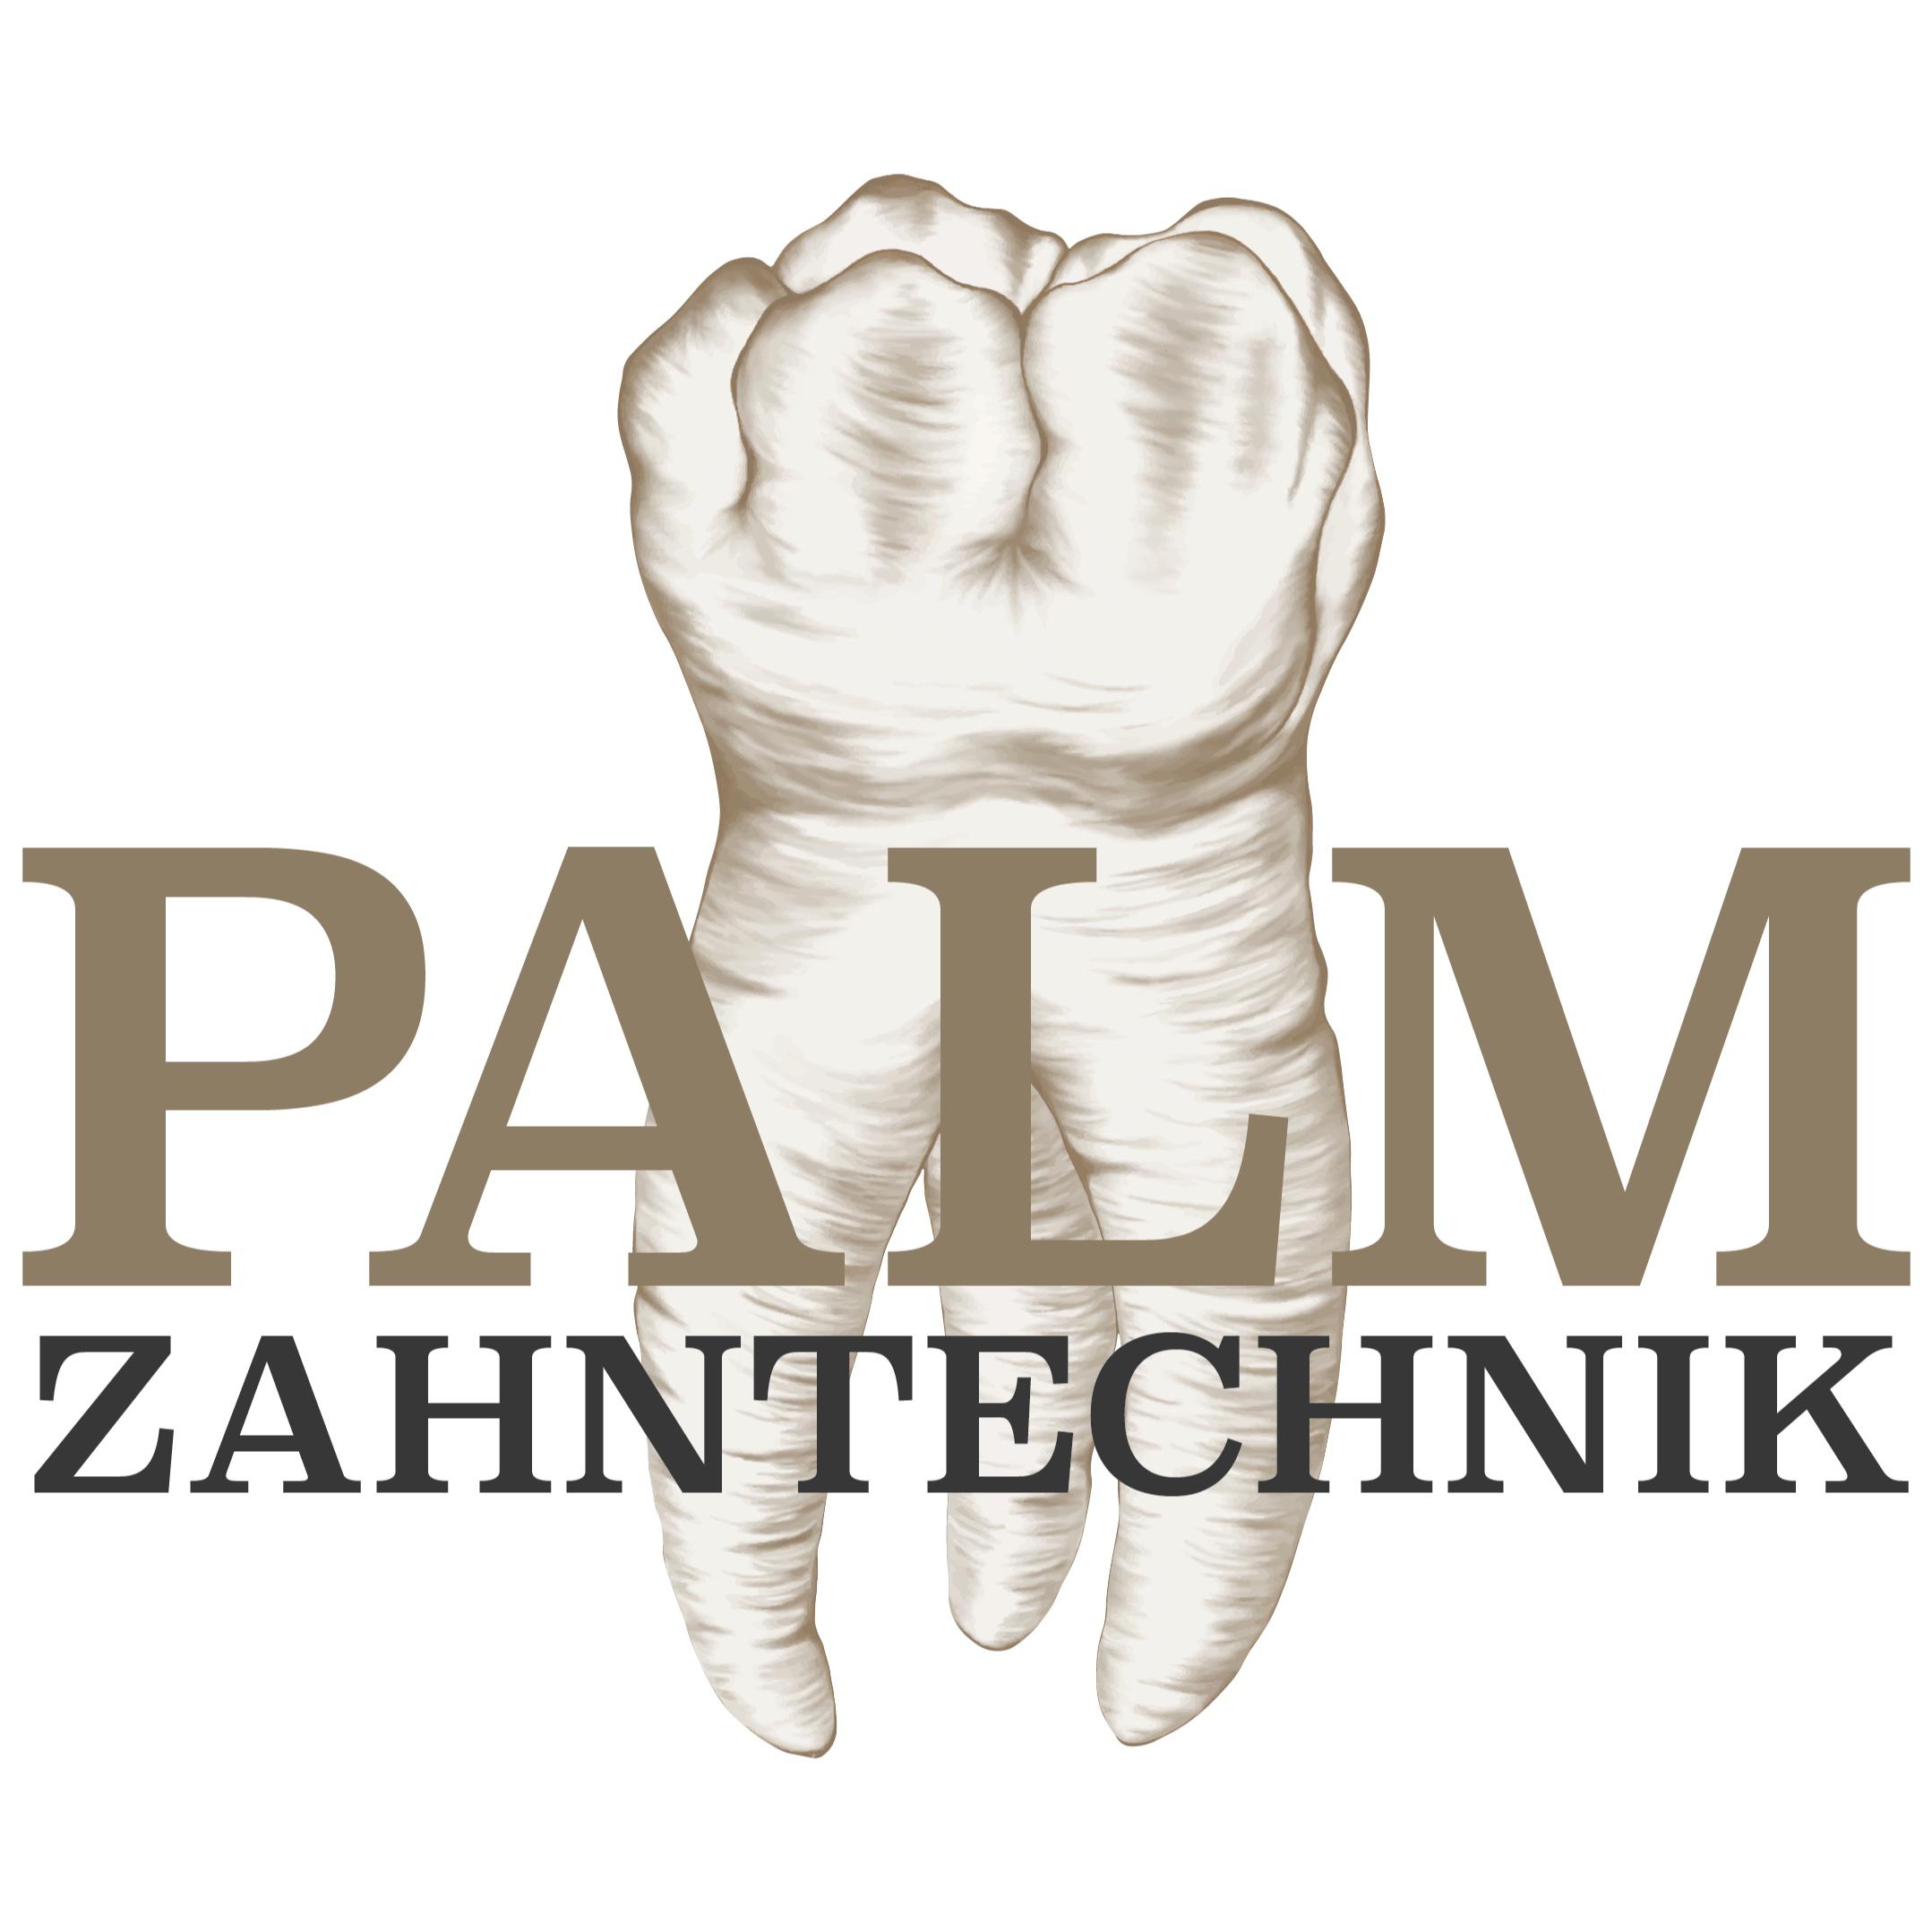 Palm Zahntechnik Inh. Sebastian Palm in Hofgeismar - Logo